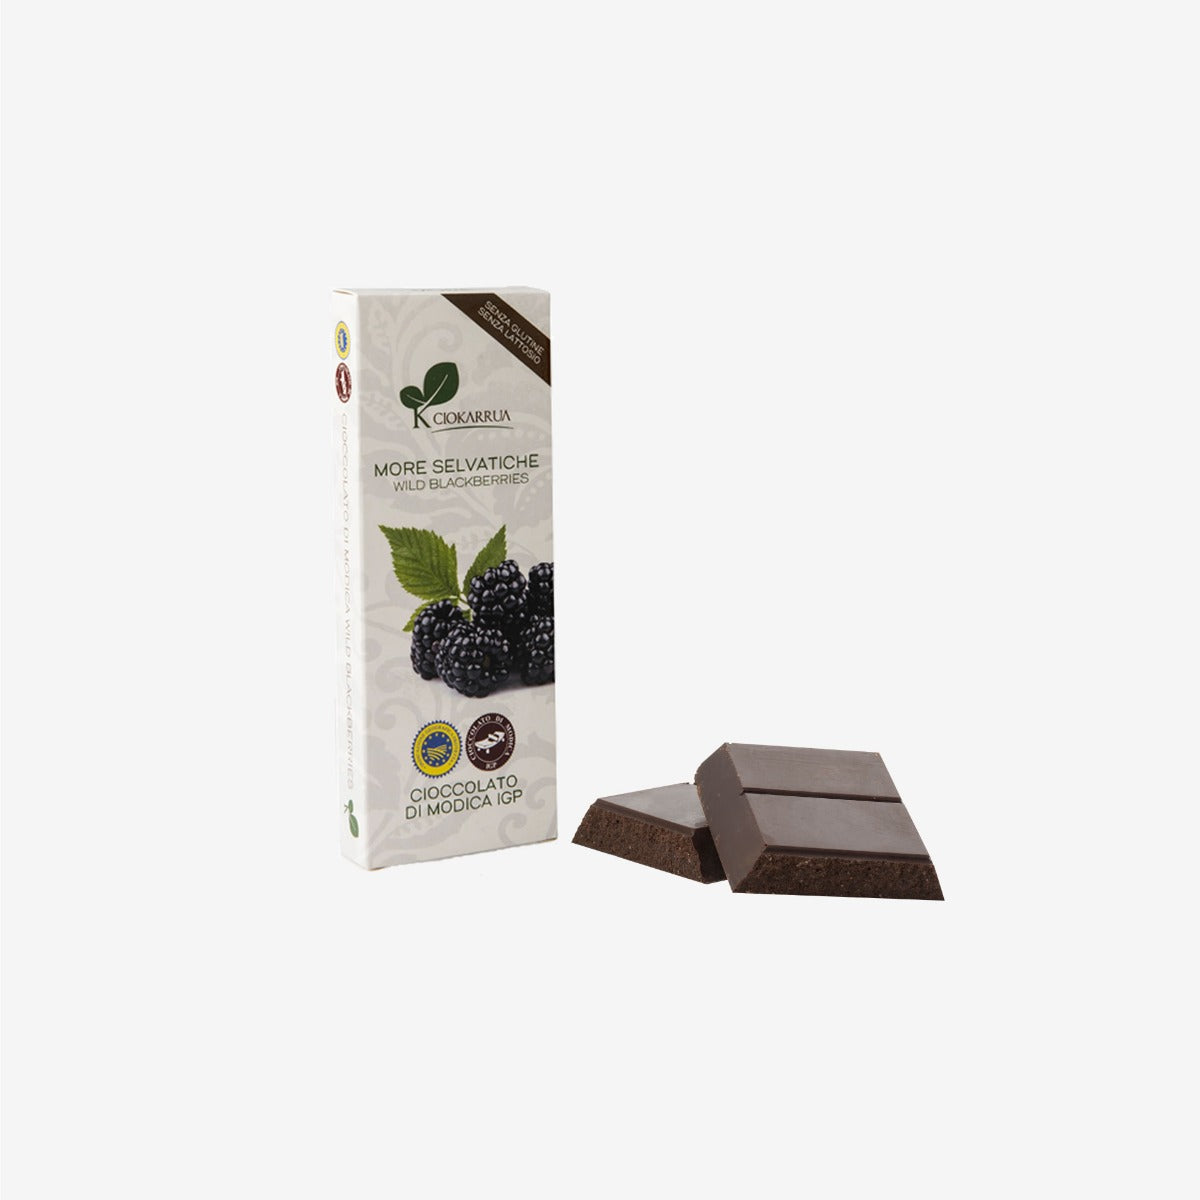 Modica chocolate with wild blackberries